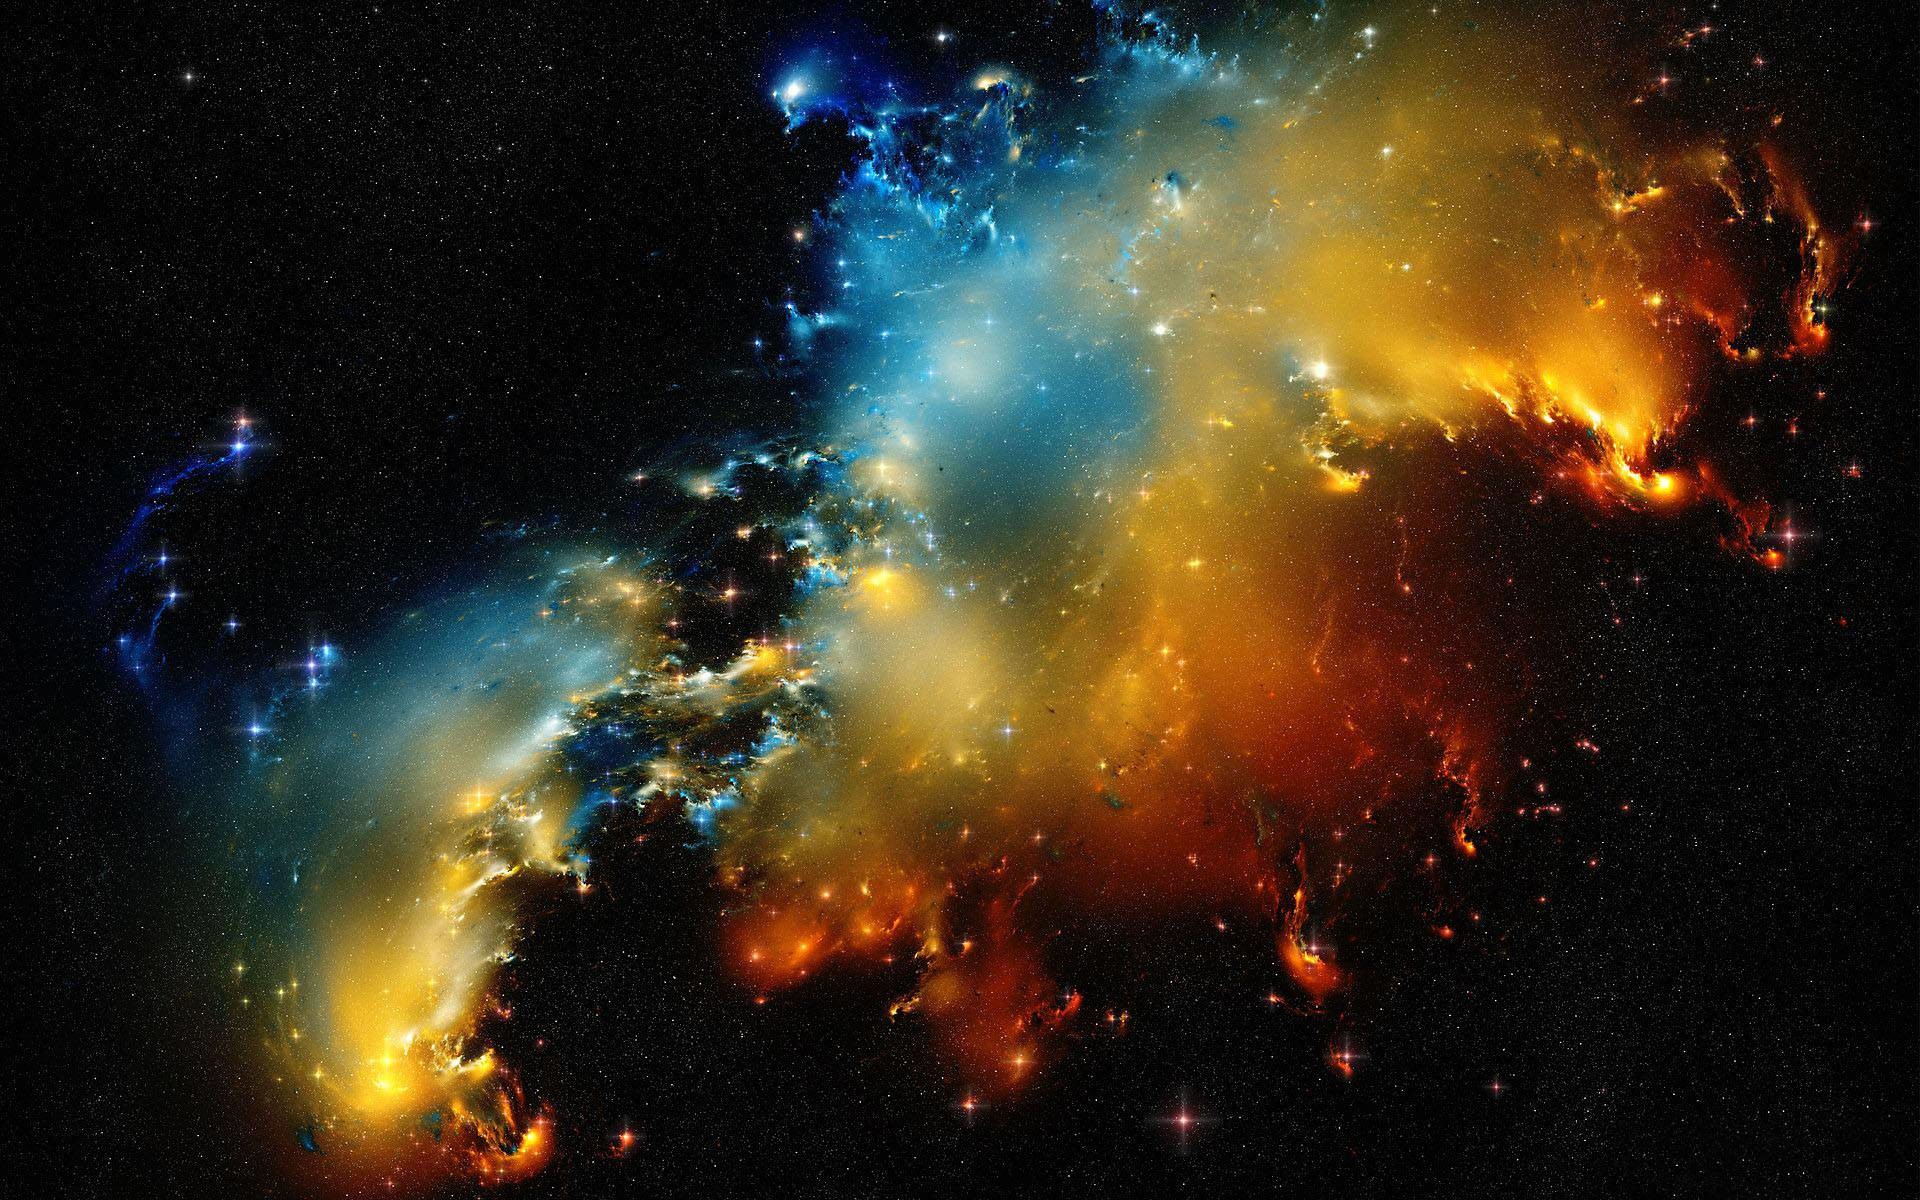 NASA Wallpaper | Most Amazing Space